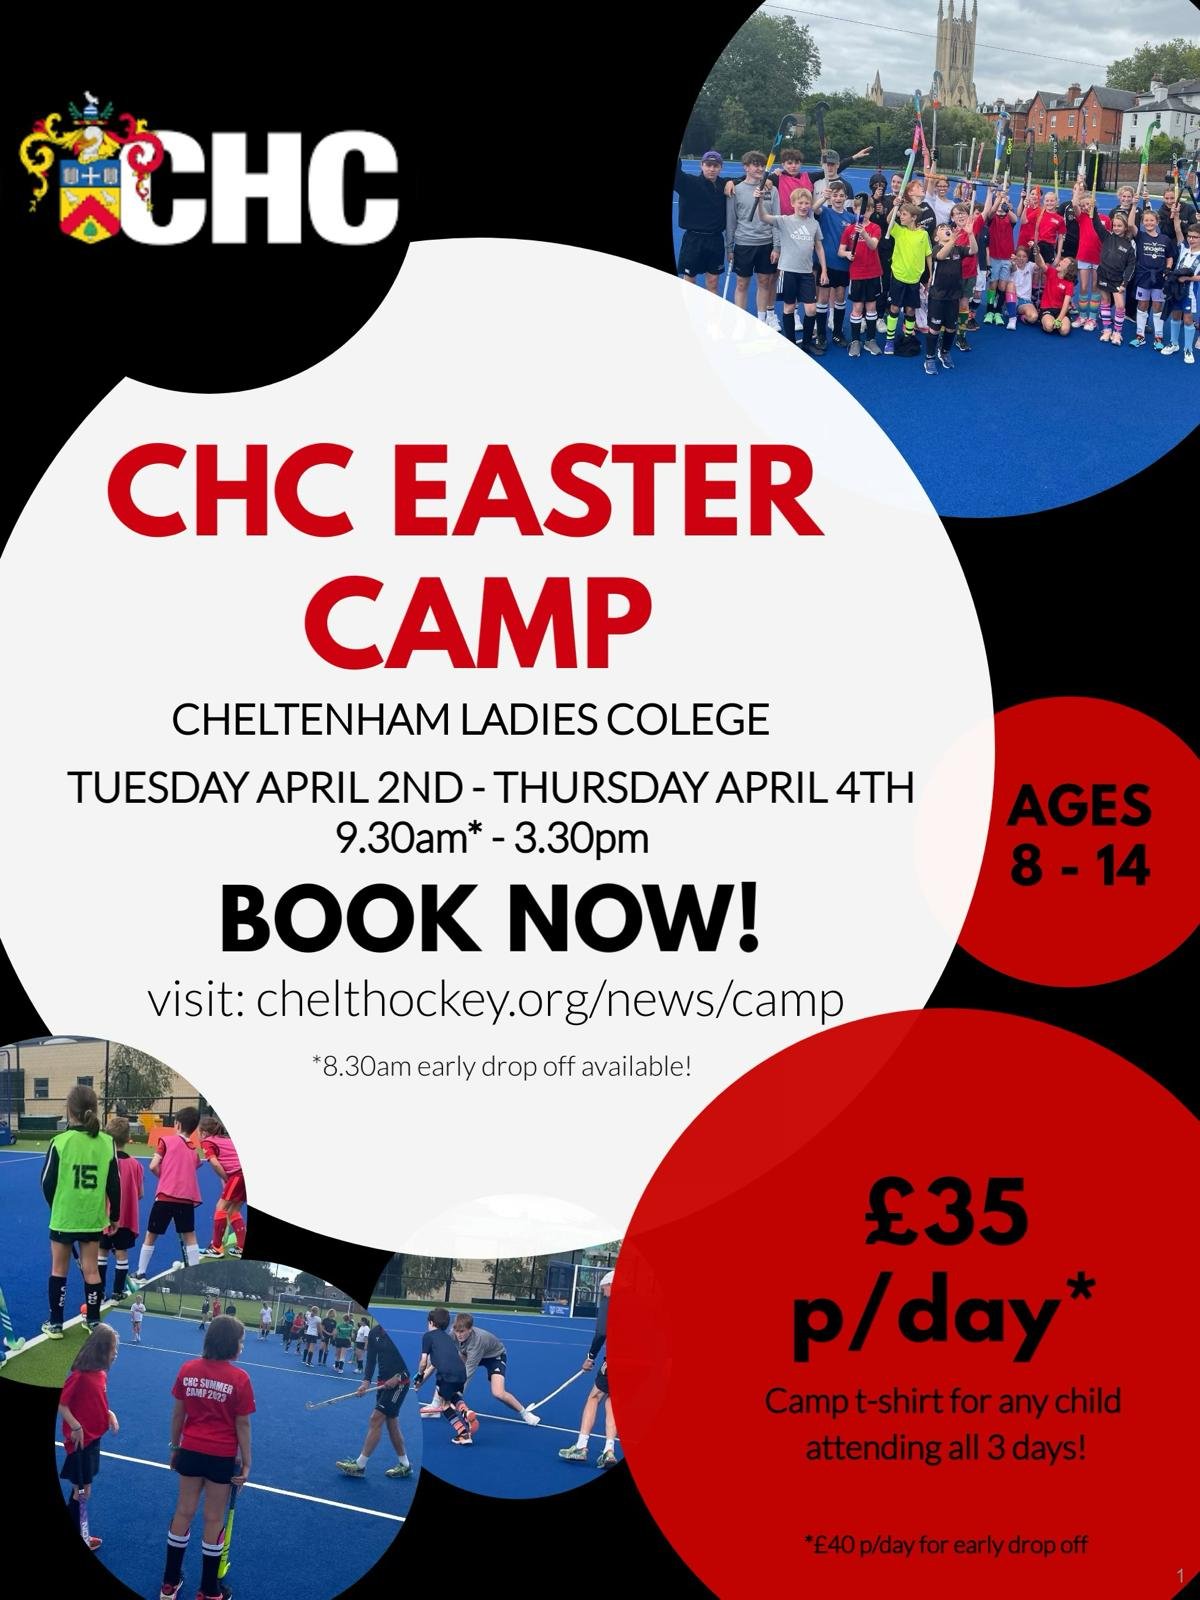 Cheltenham Hockey Club Kids Camp - Easter